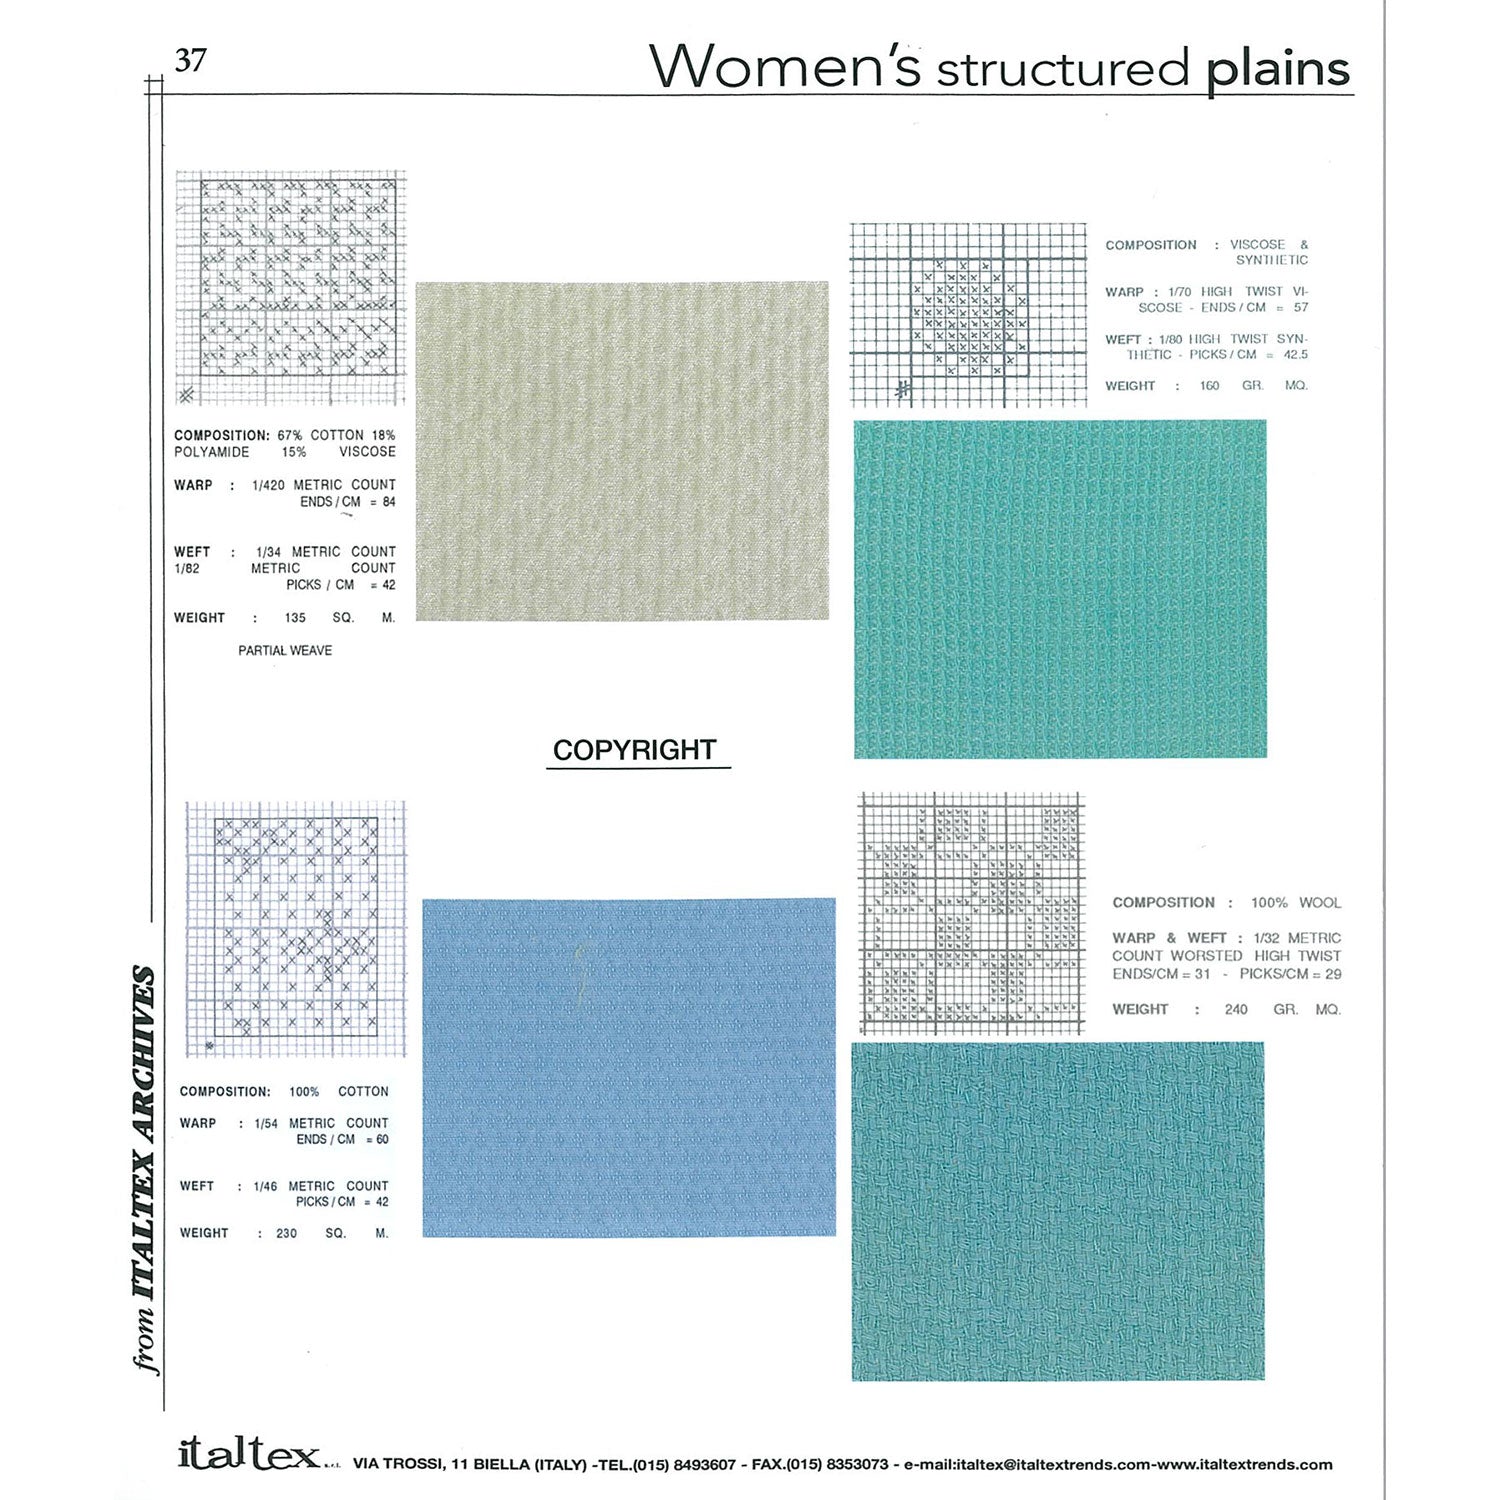 Ebook Women's Structured Plains Vol. 2